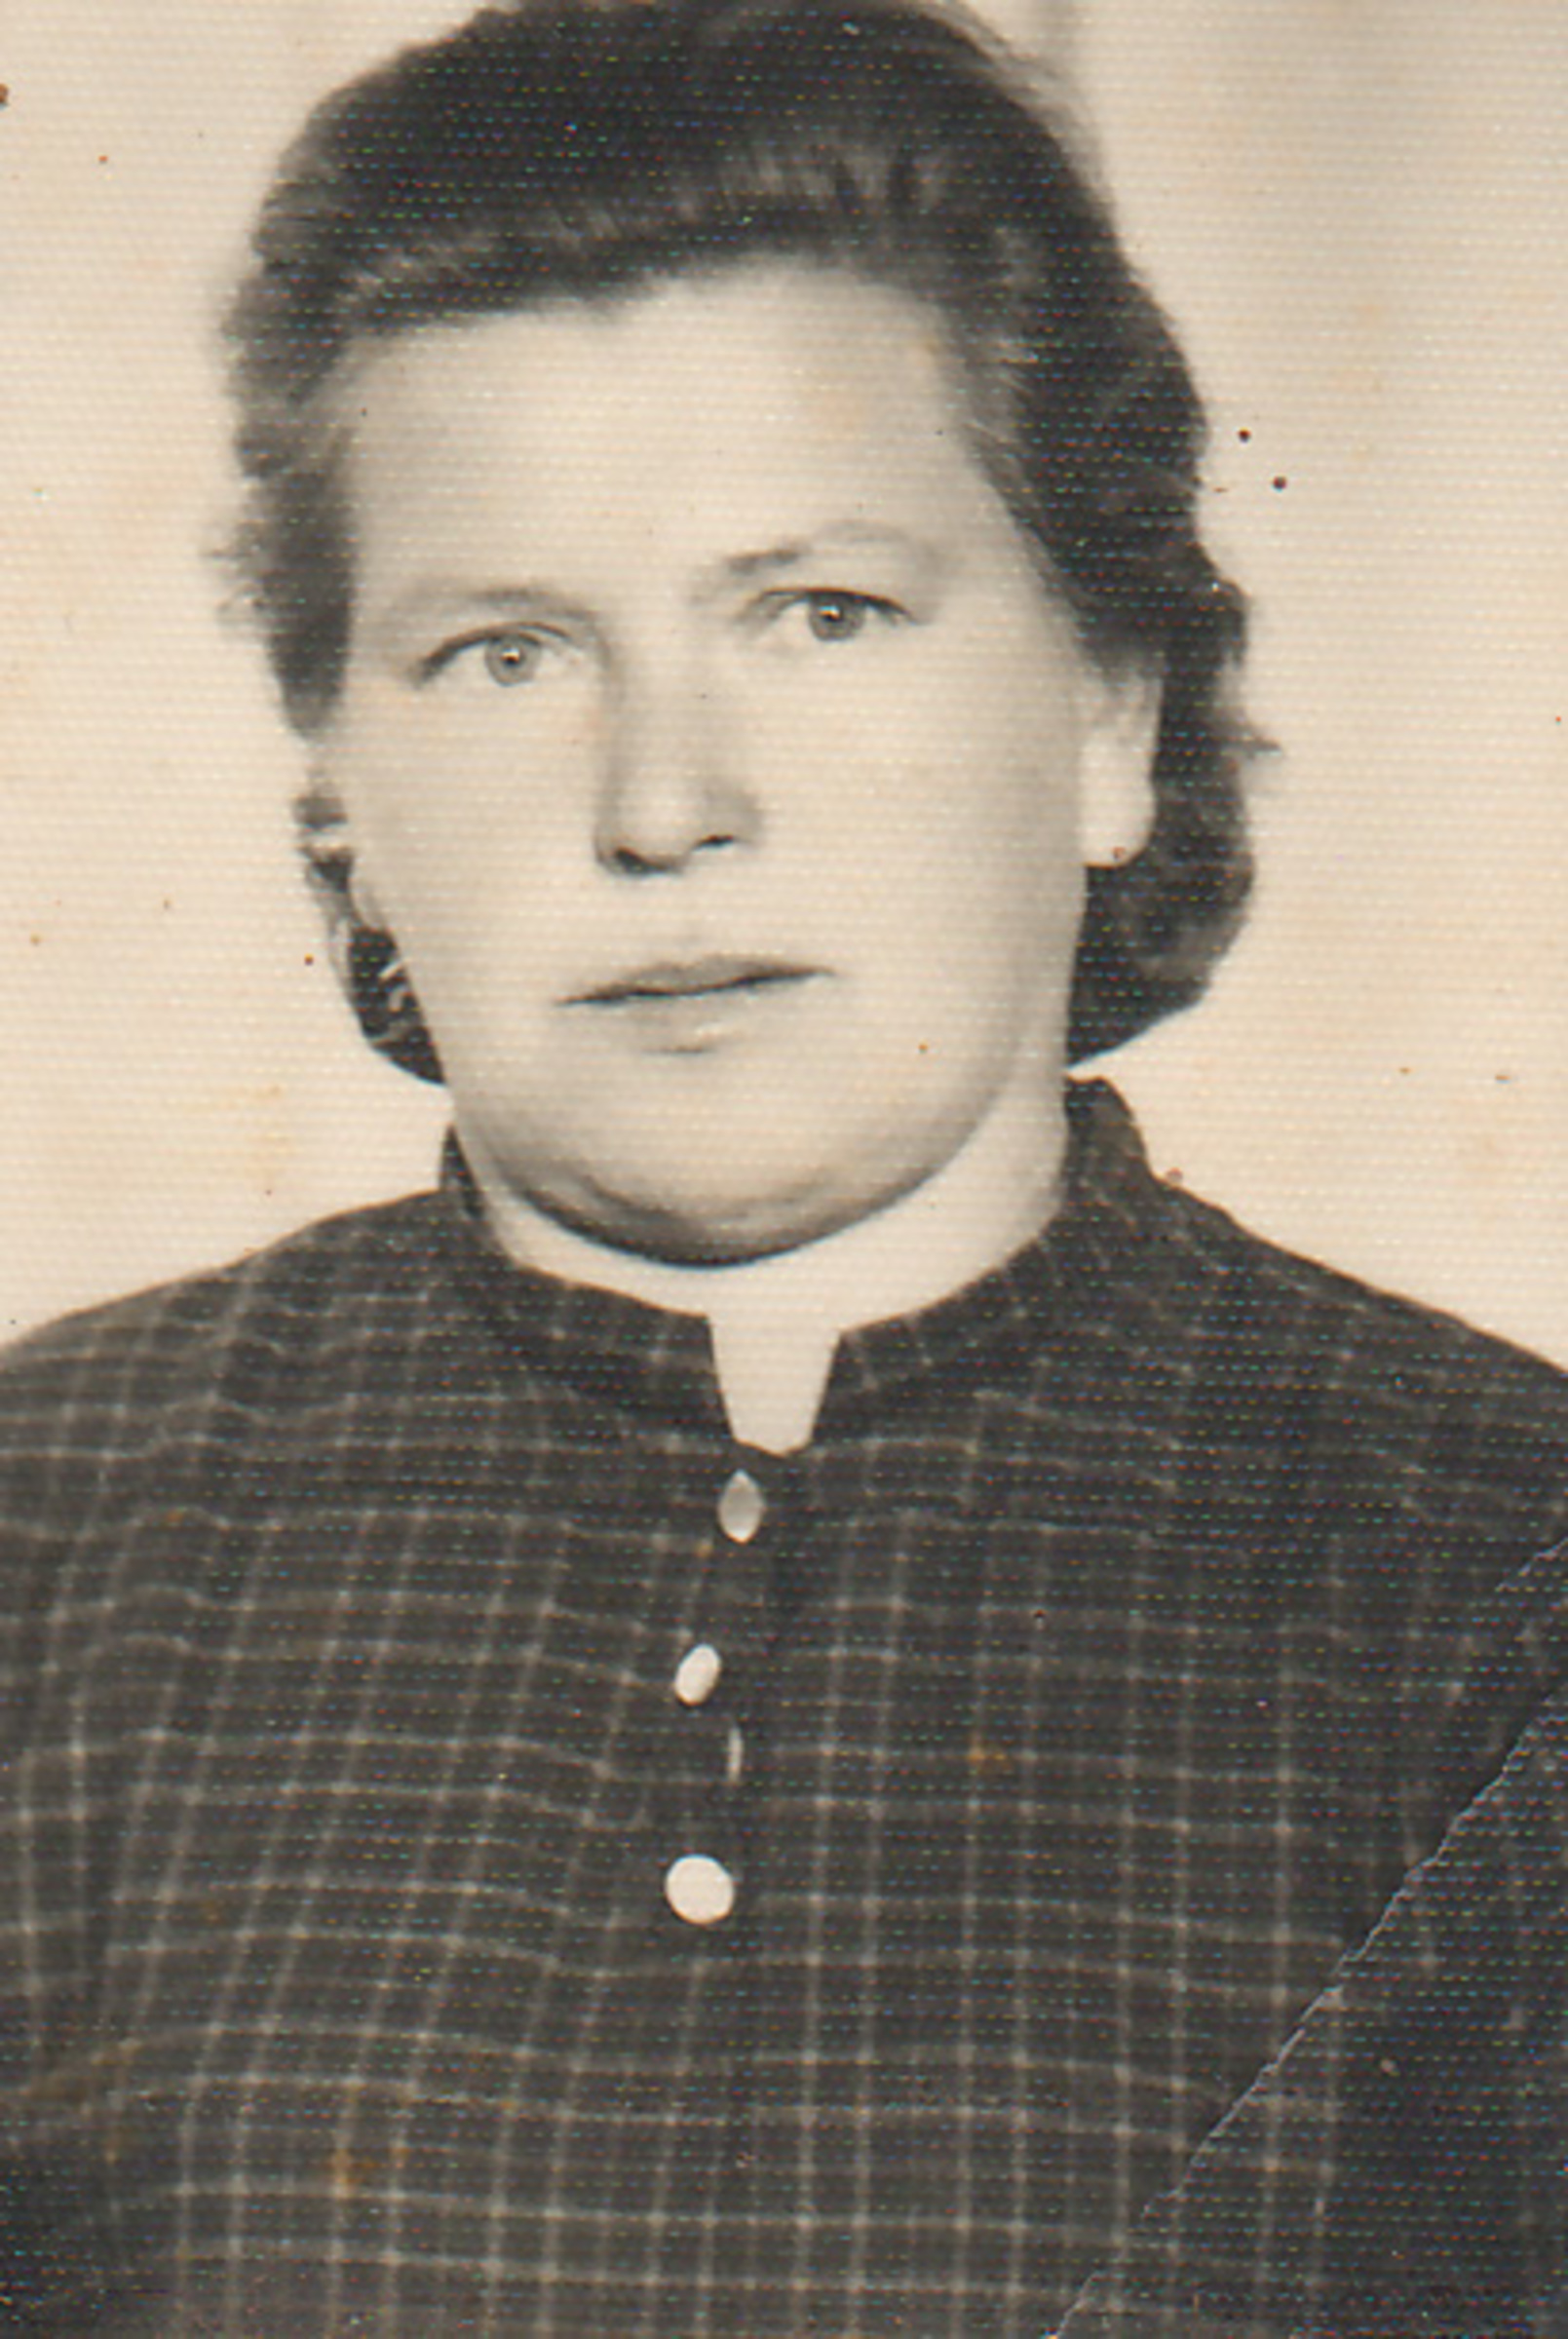 Dobový portrét pamětnice Franjica Poznik (fotka do občanky), kolem r. 1970 (Franjica Poznik, slika za ličnu kartu, oko 1970.)